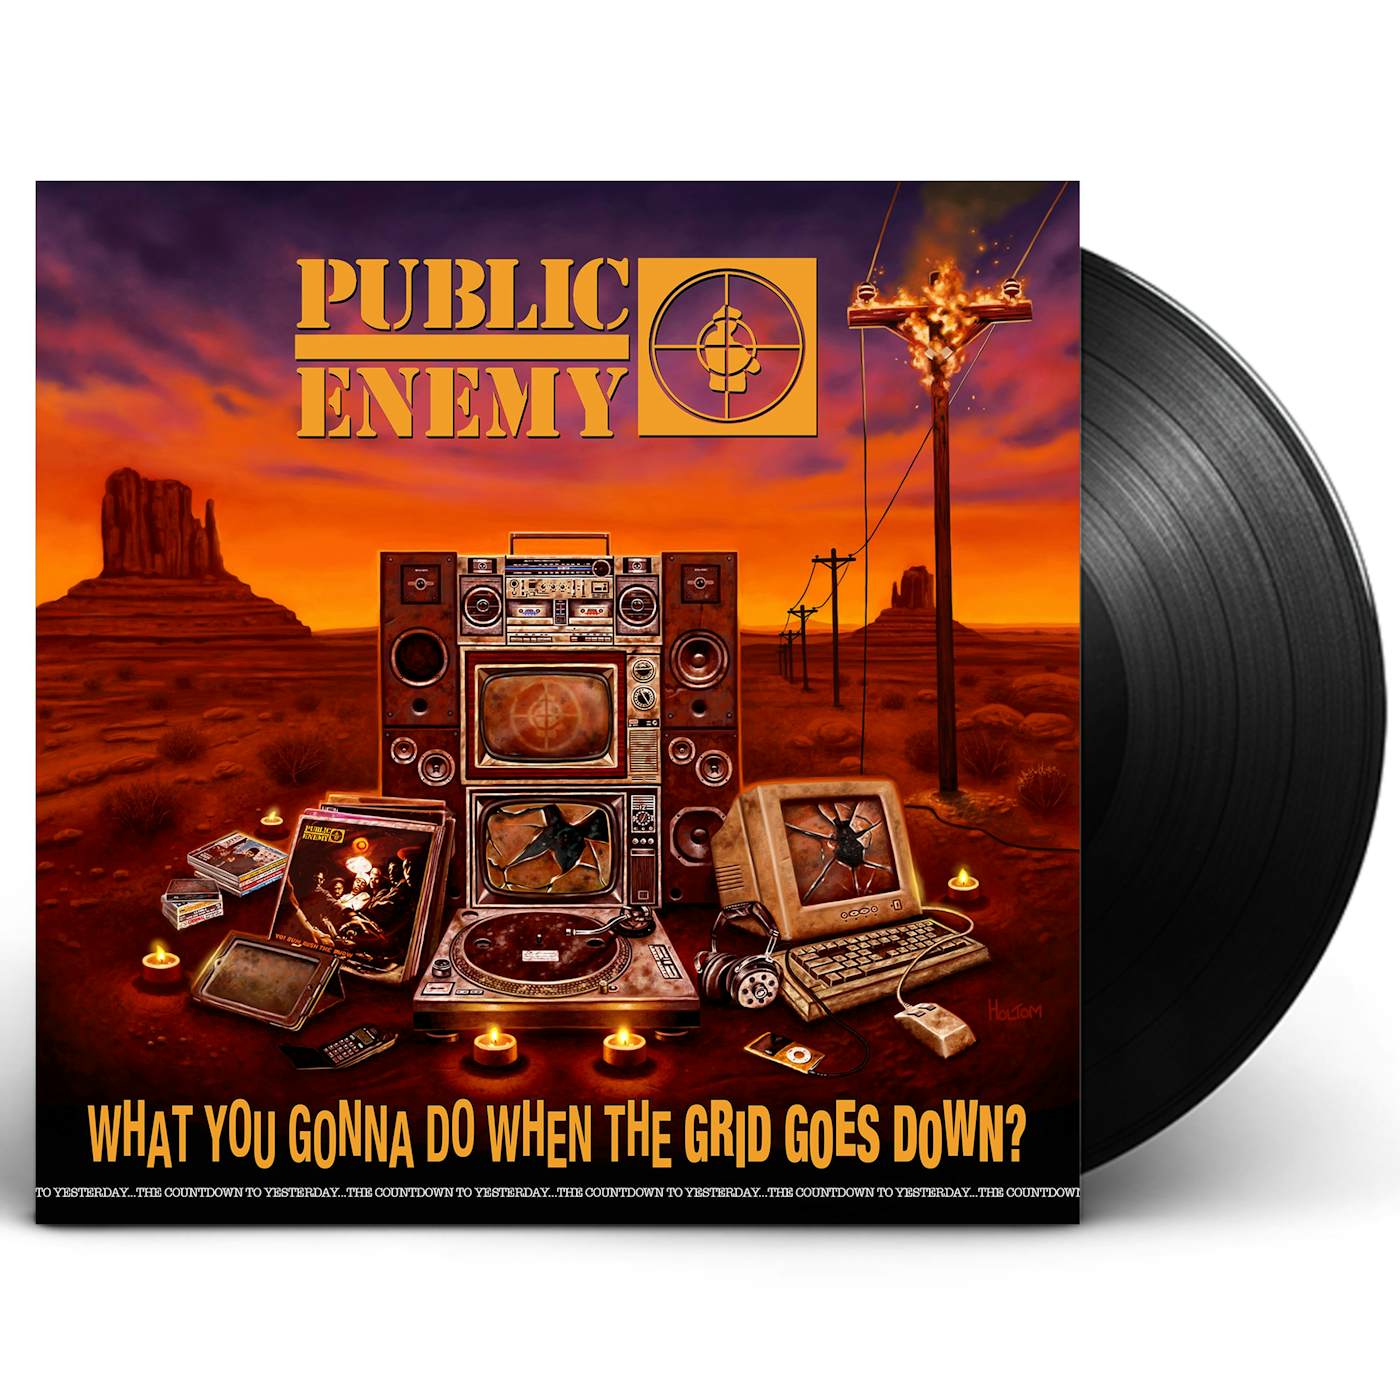 Public Enemy "What You Gonna Do When The Grid Goes Down?" LP Vinyl